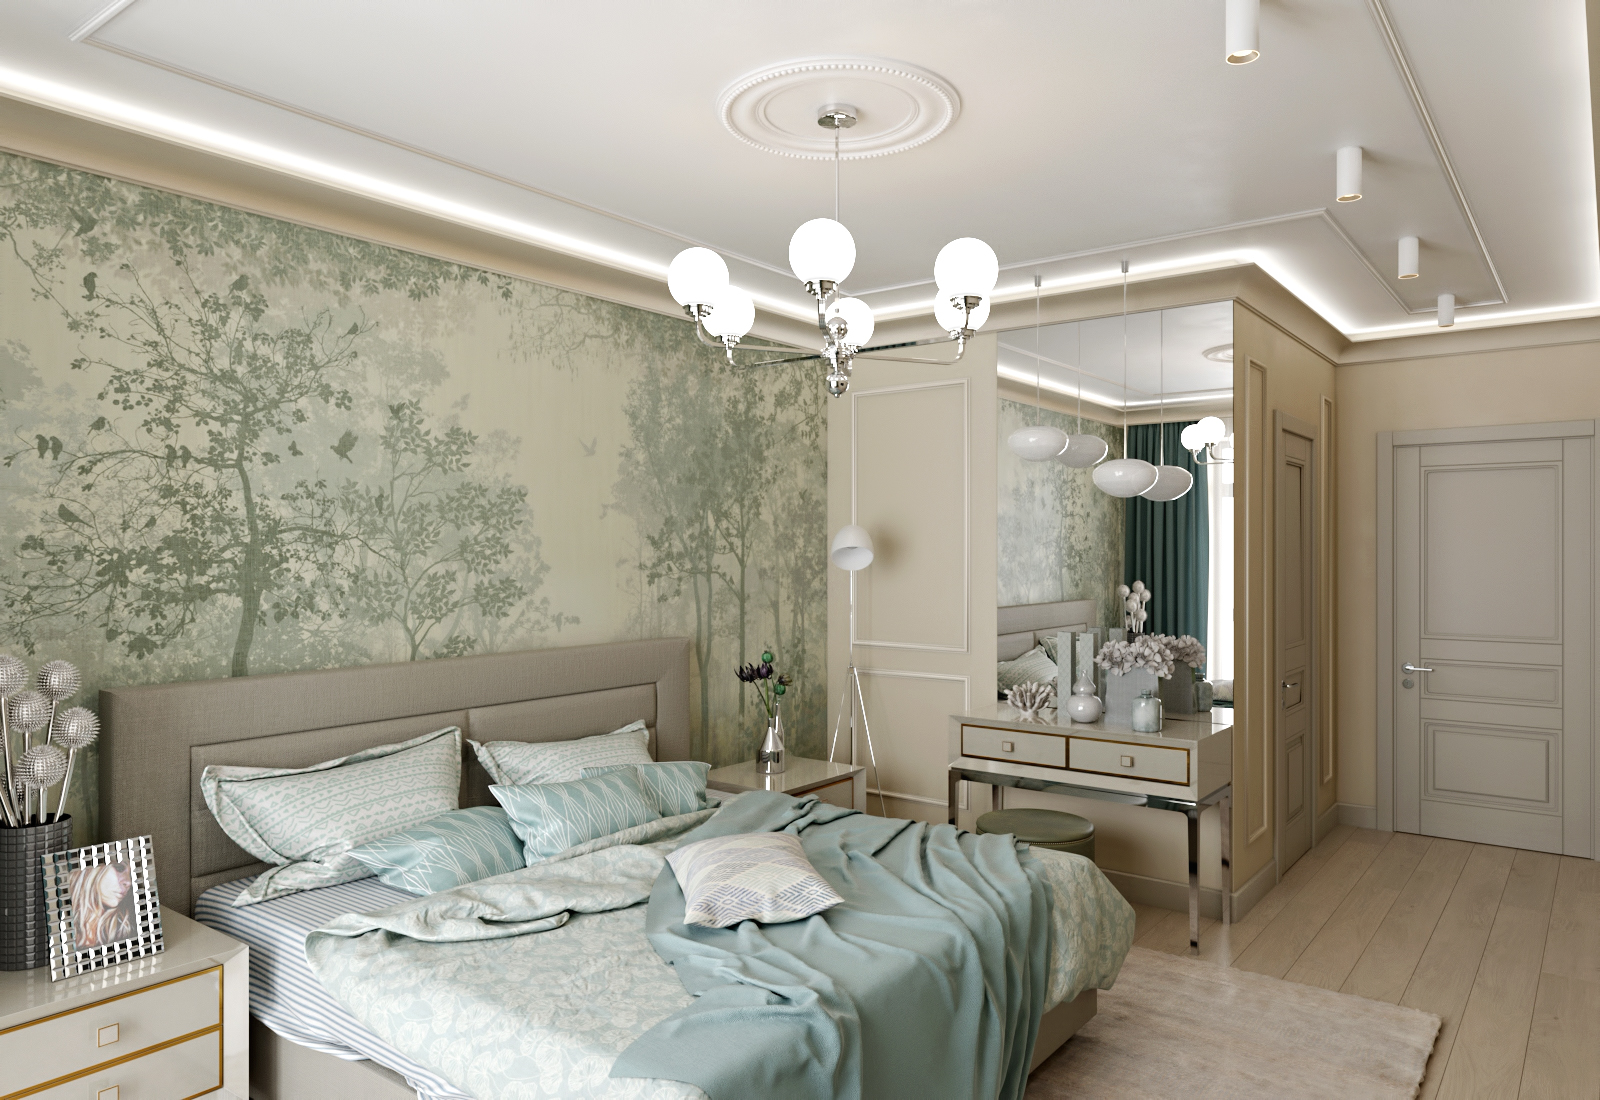 Bedroom в 3d max corona render зображення